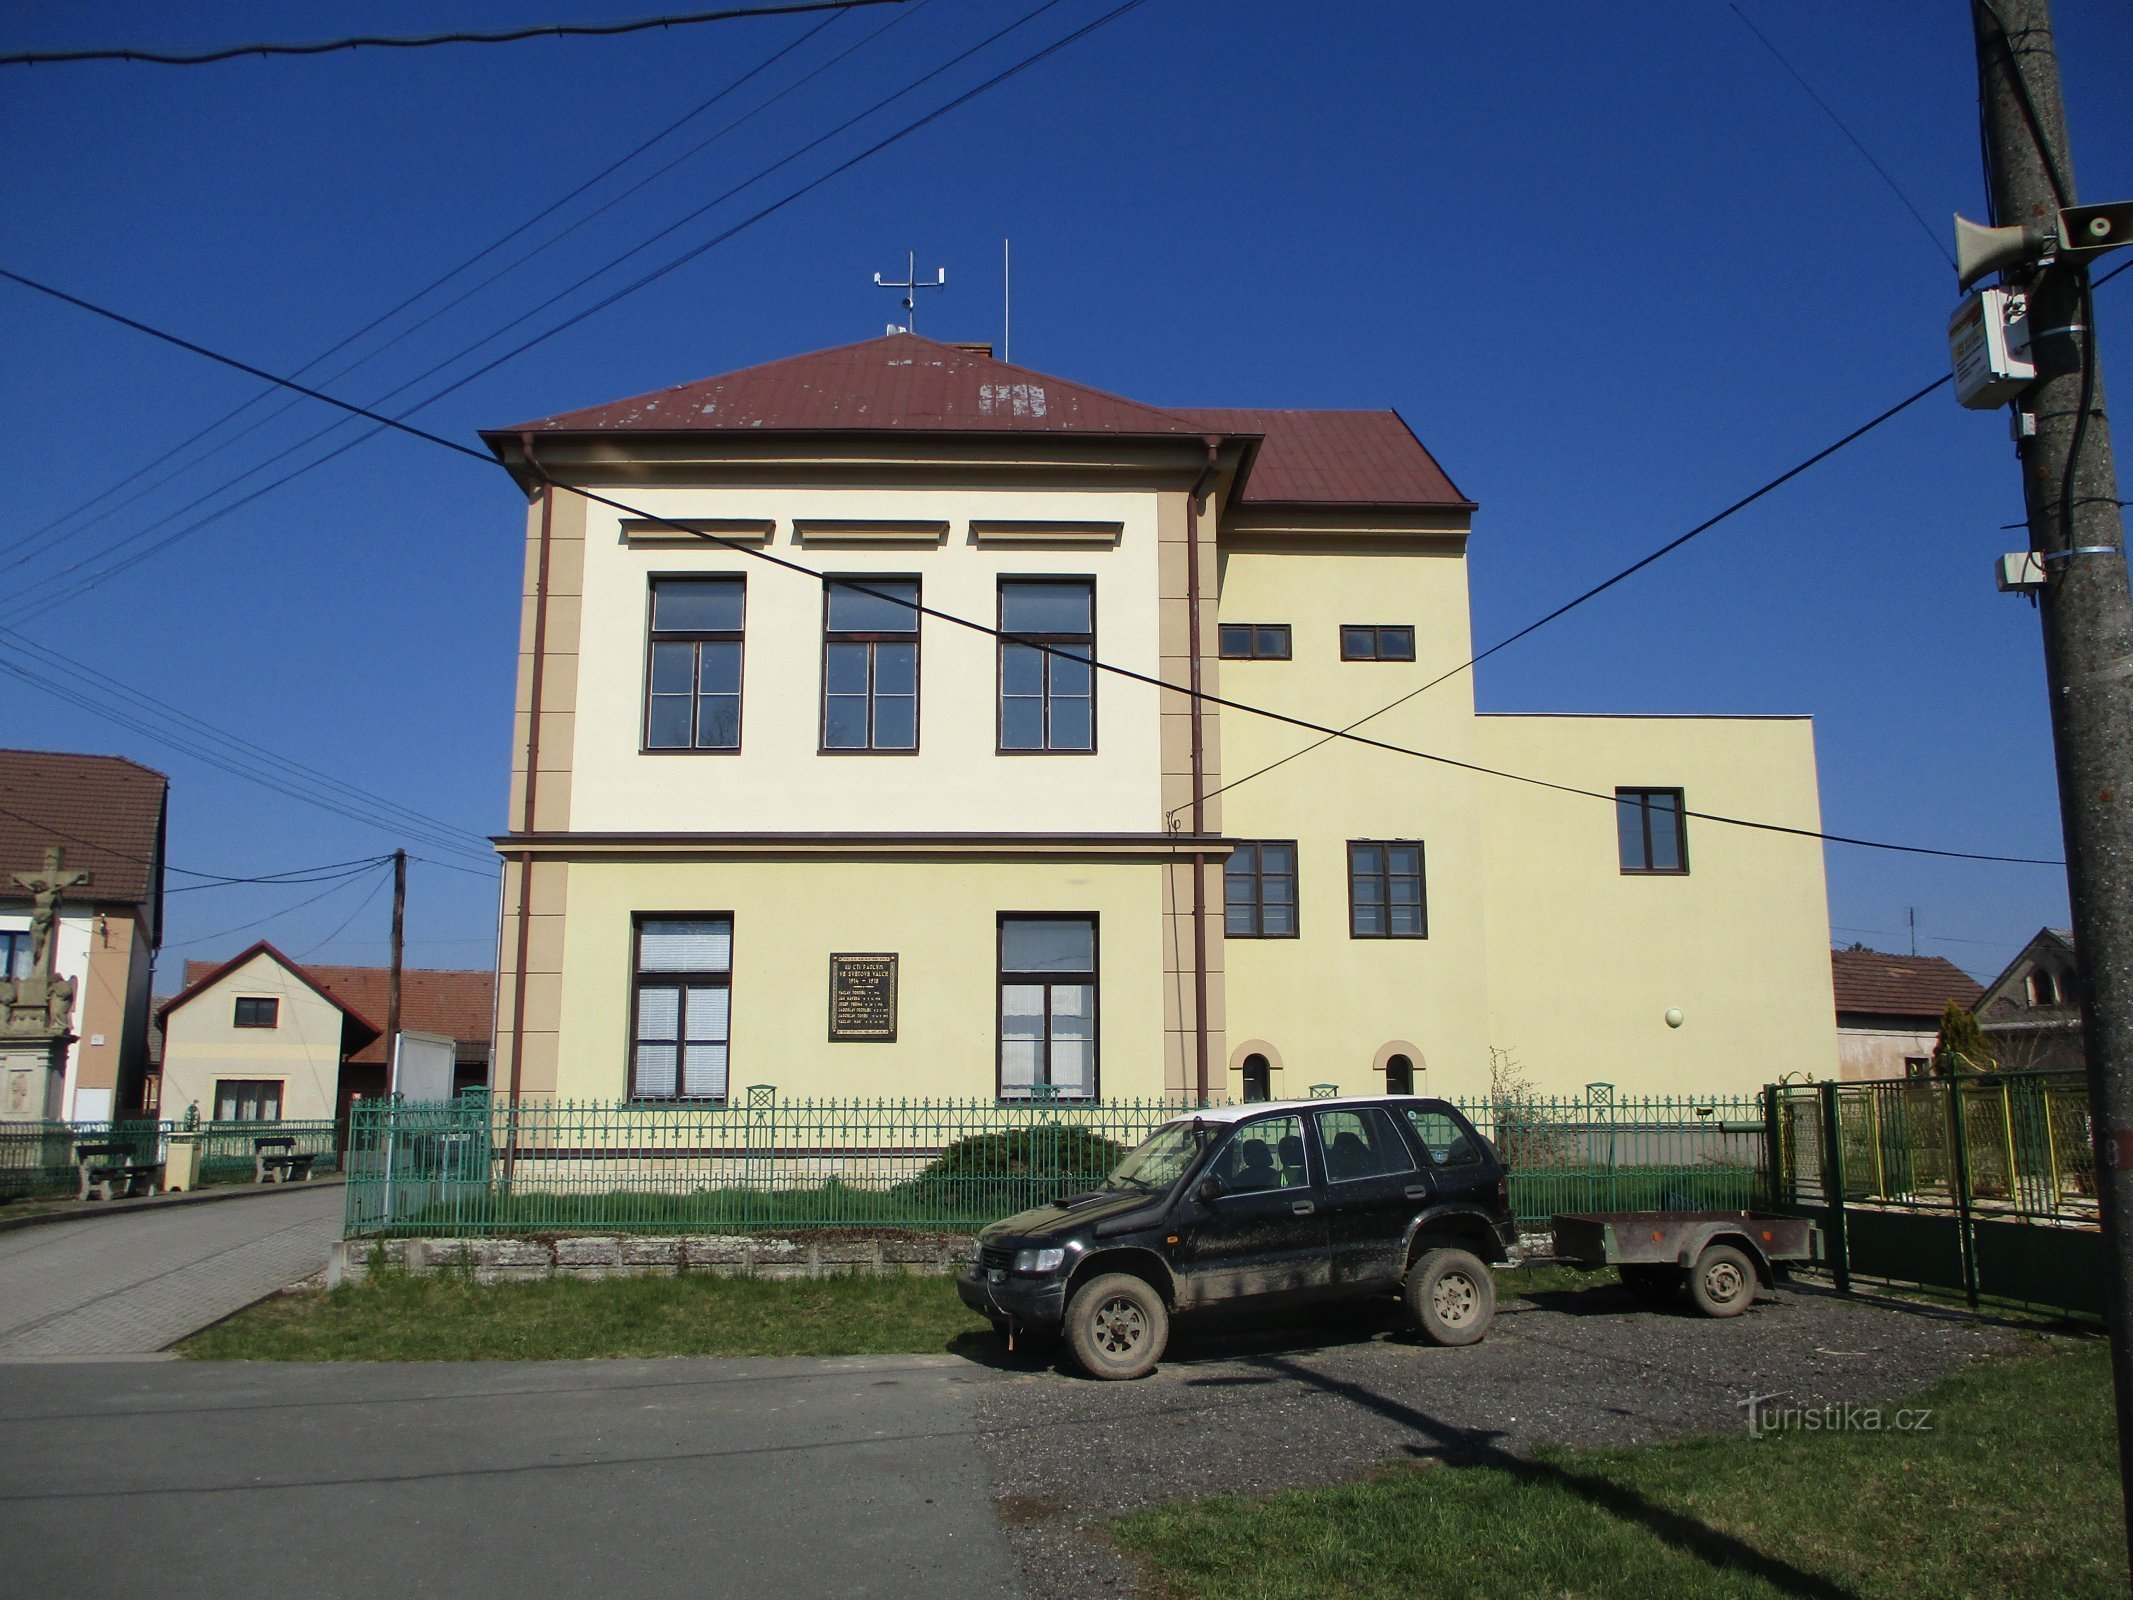 Școală cu extindere (Račice nad Trotinou, 2.4.2020 aprilie XNUMX)